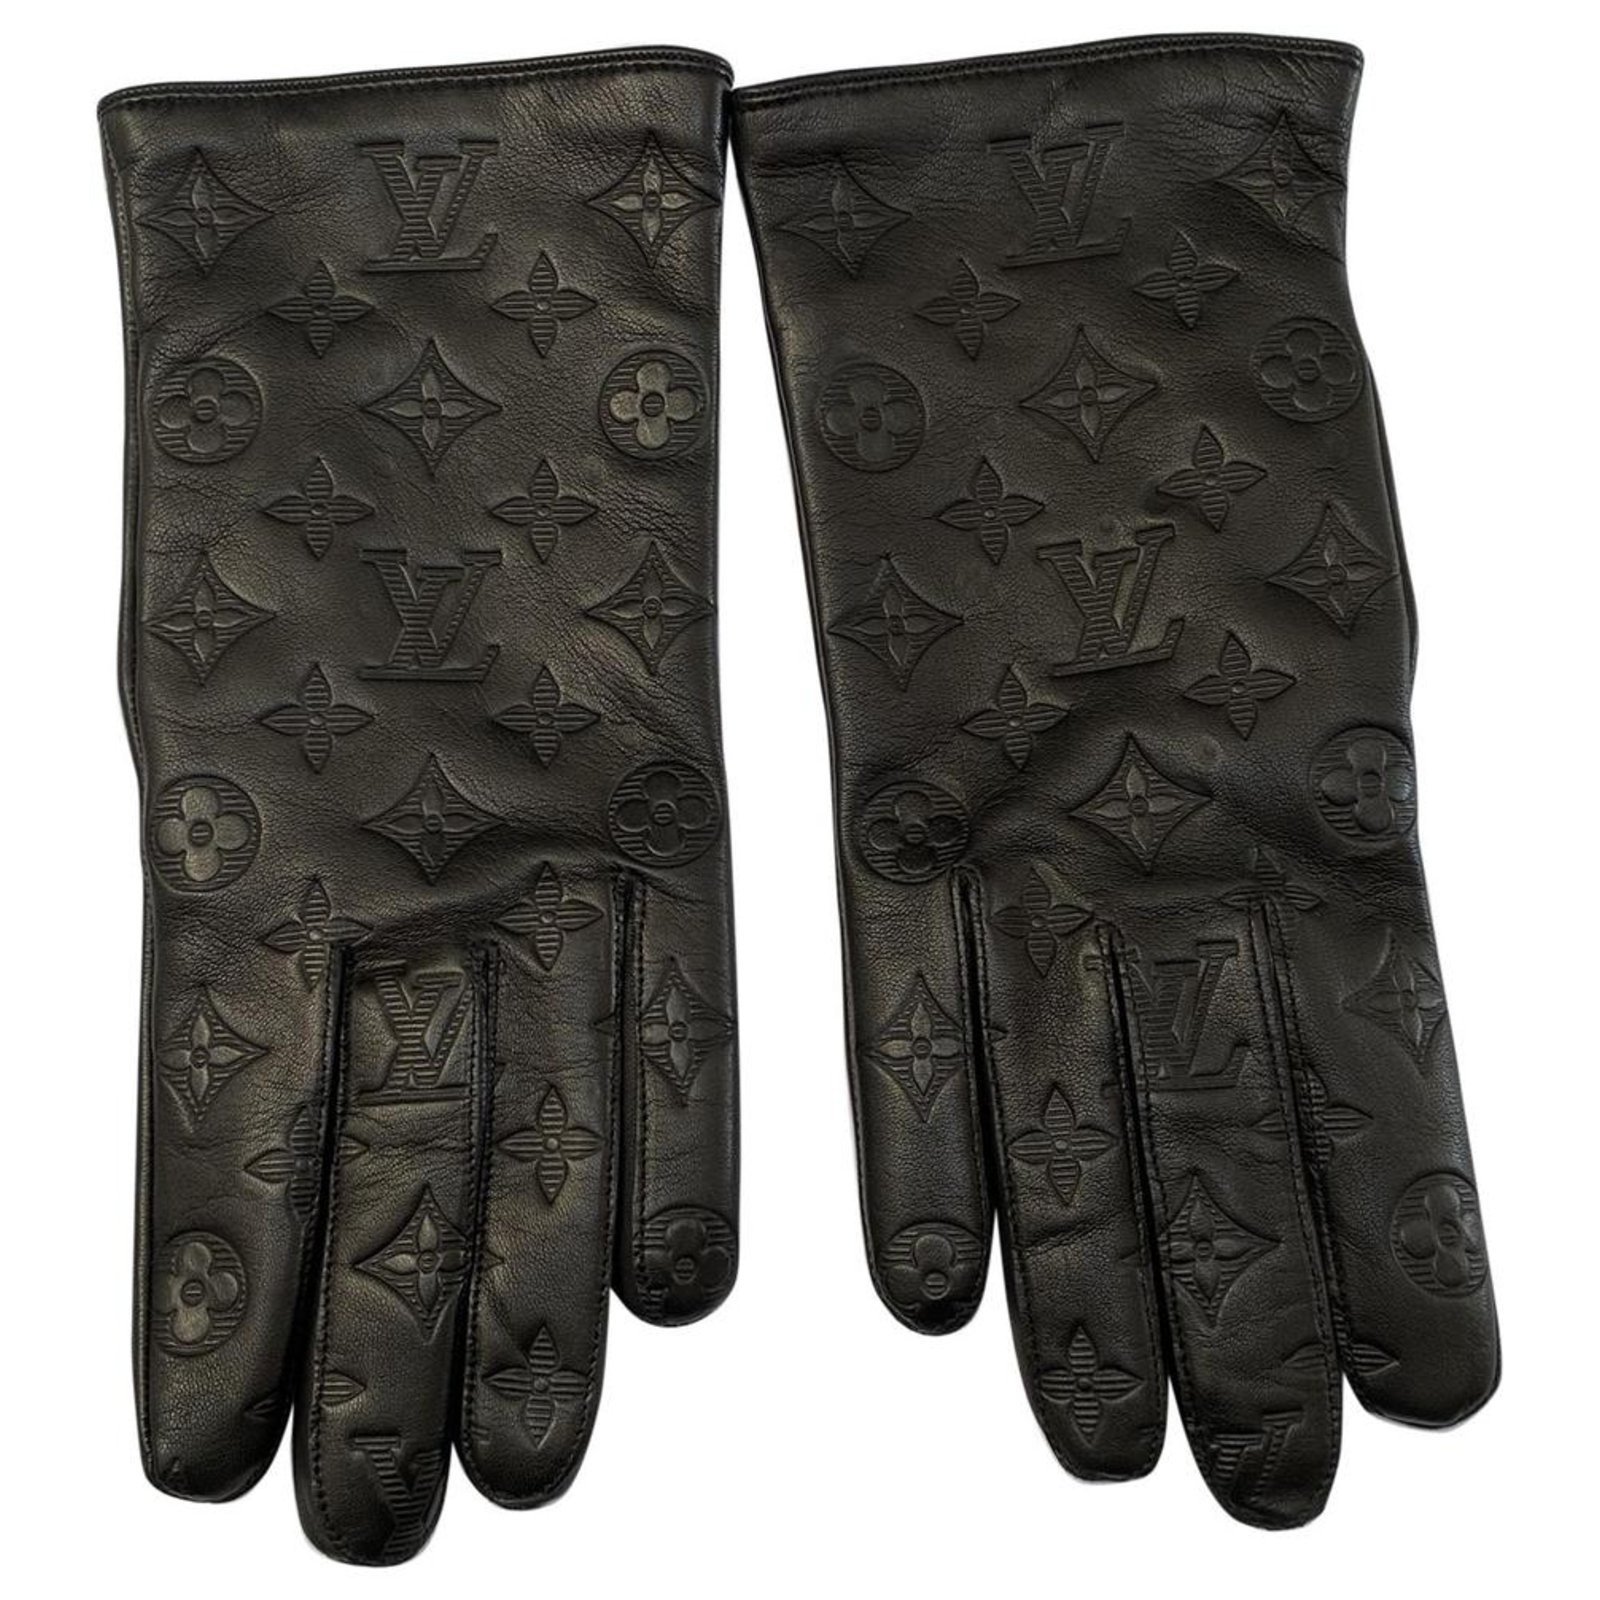 Louis Vuitton LV Glove Loafers , Black, 9.5